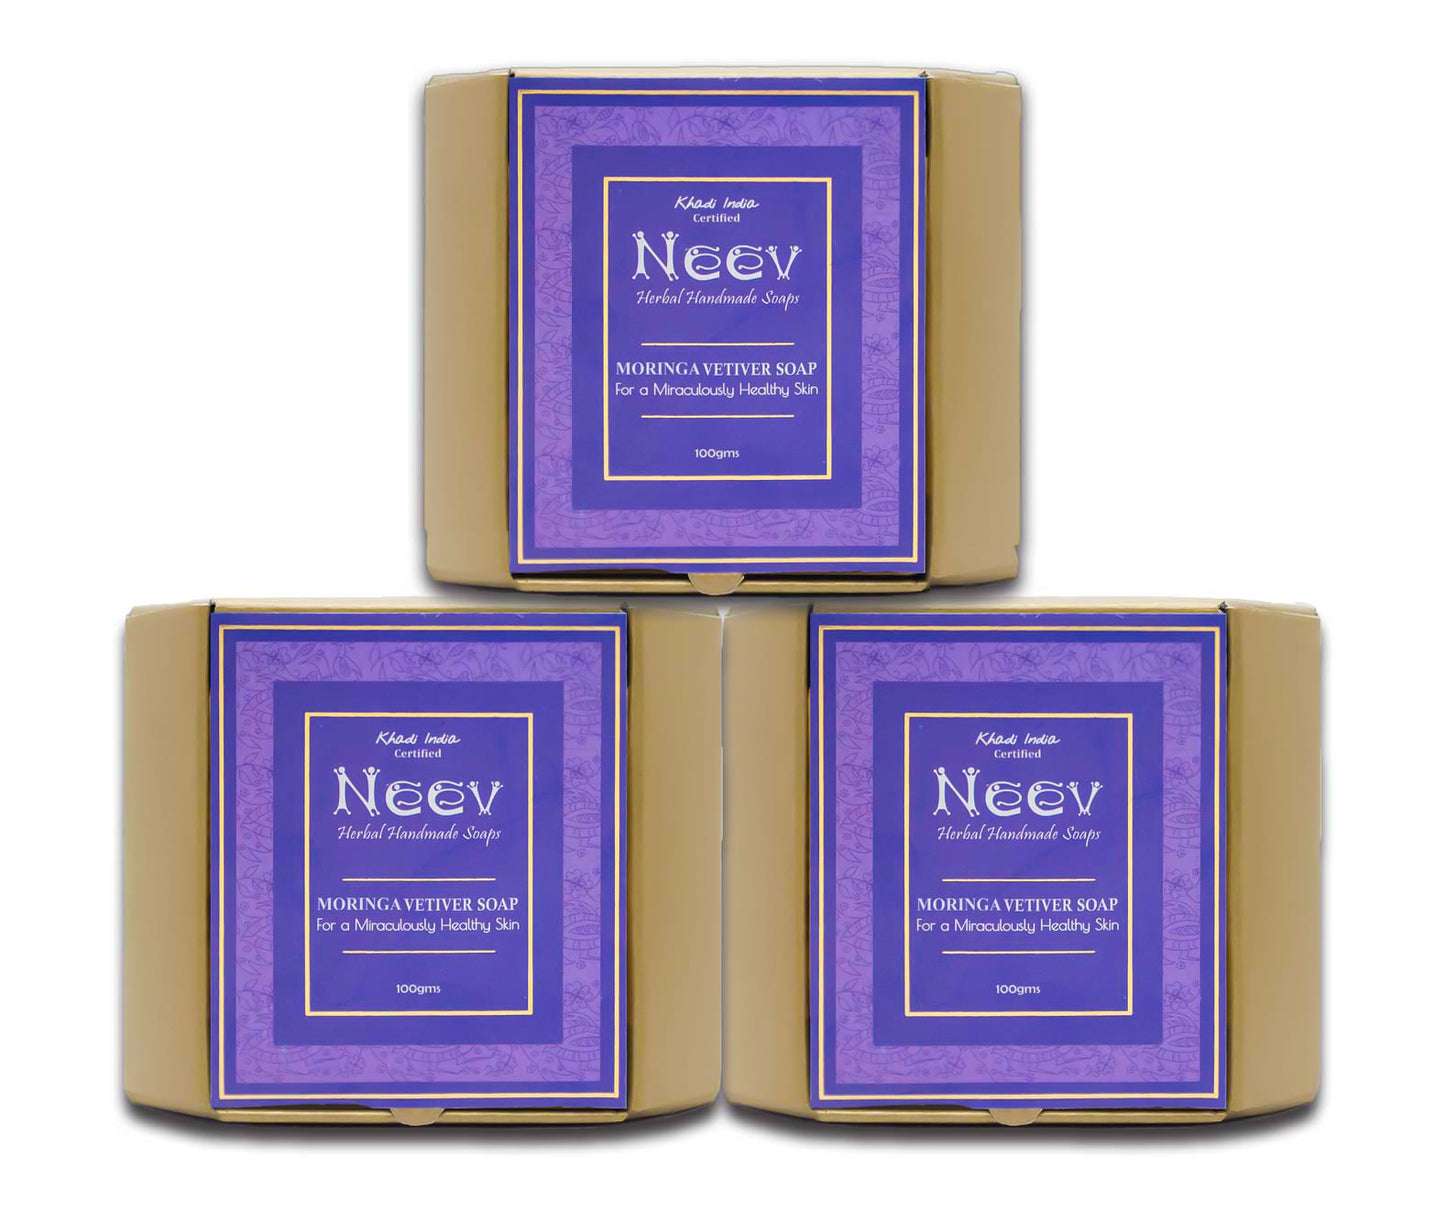 Neev Moringa Vetiver Soap (100gm) - Set of 3